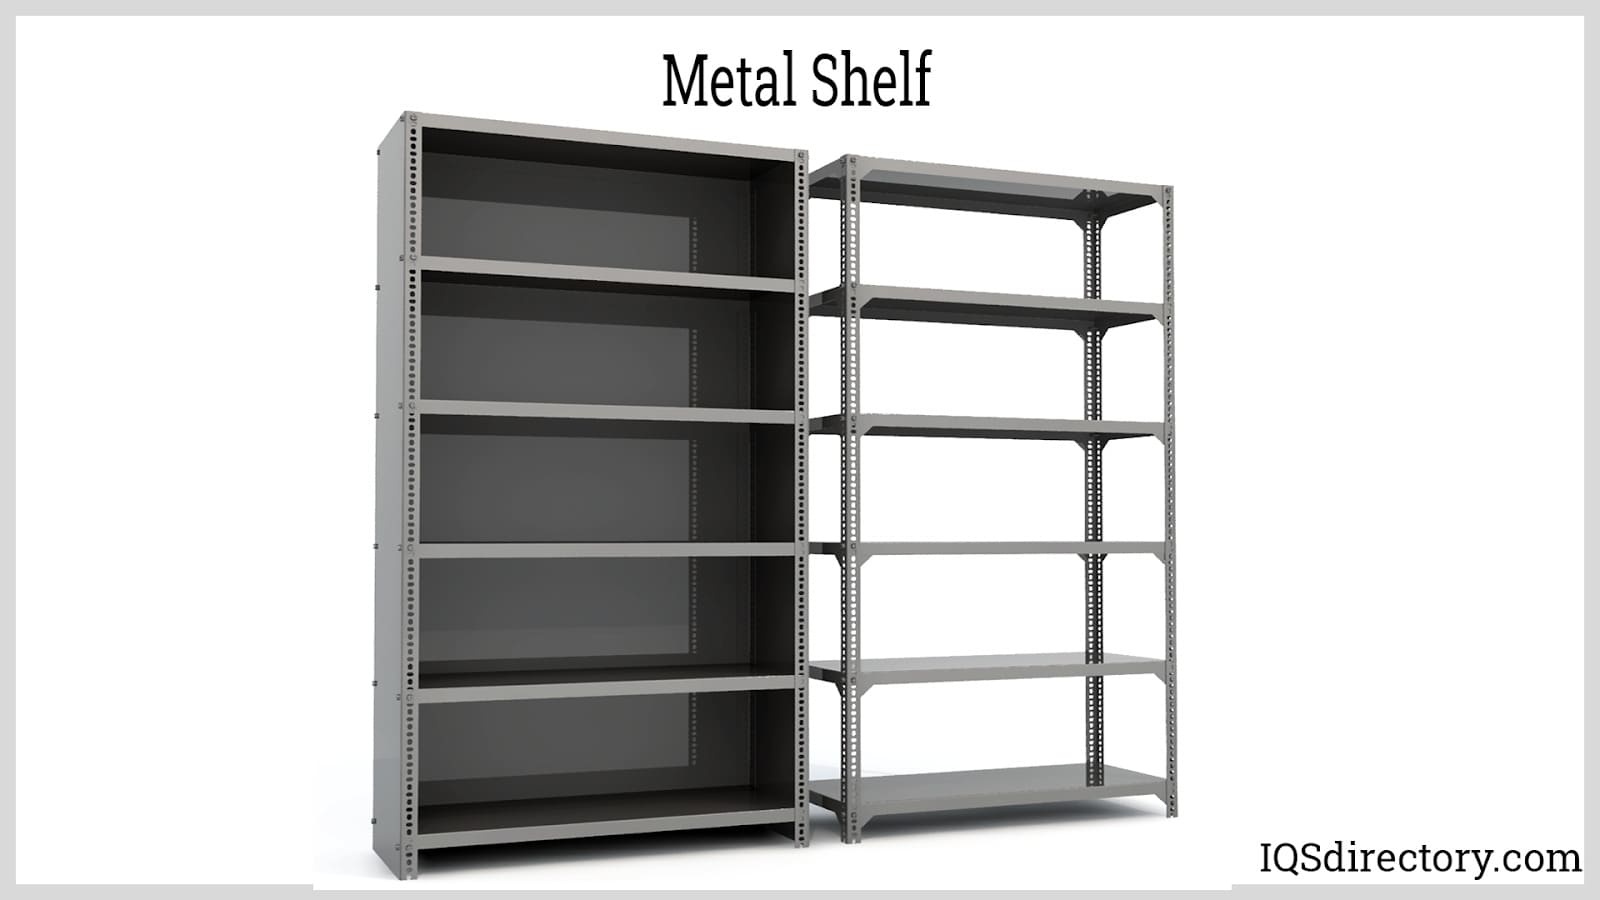 https://www.iqsdirectory.com/articles/steel-shelving/metal-shelving/metal-shelf.jpg